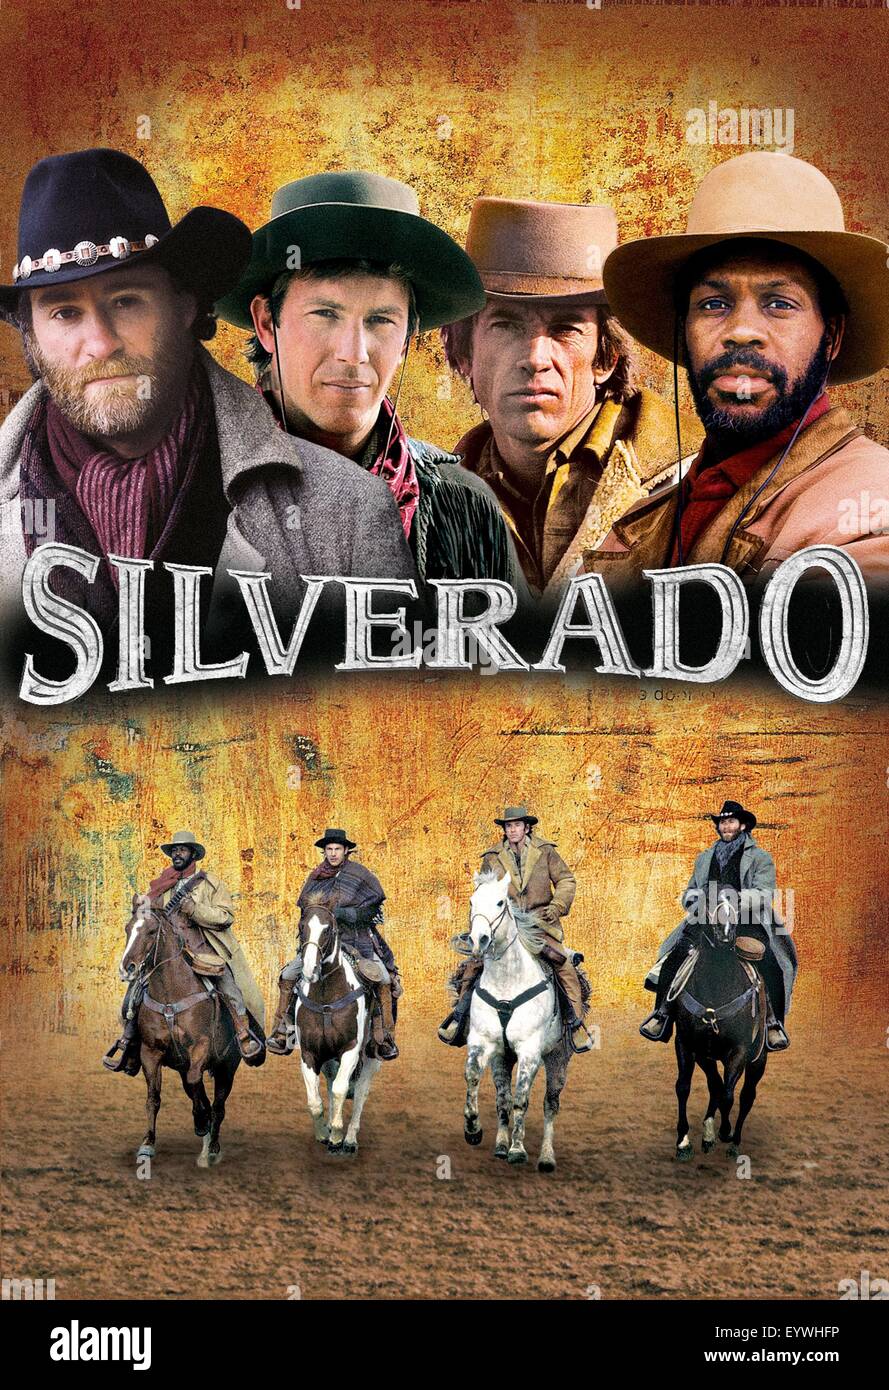 Silverado ; Year : 1985 USA ; Director : Lawrence Kasdan ; Kevin Kline, Kevin Costner, Scott Glenn, Danny Glover ; Movie poster Stock Photo